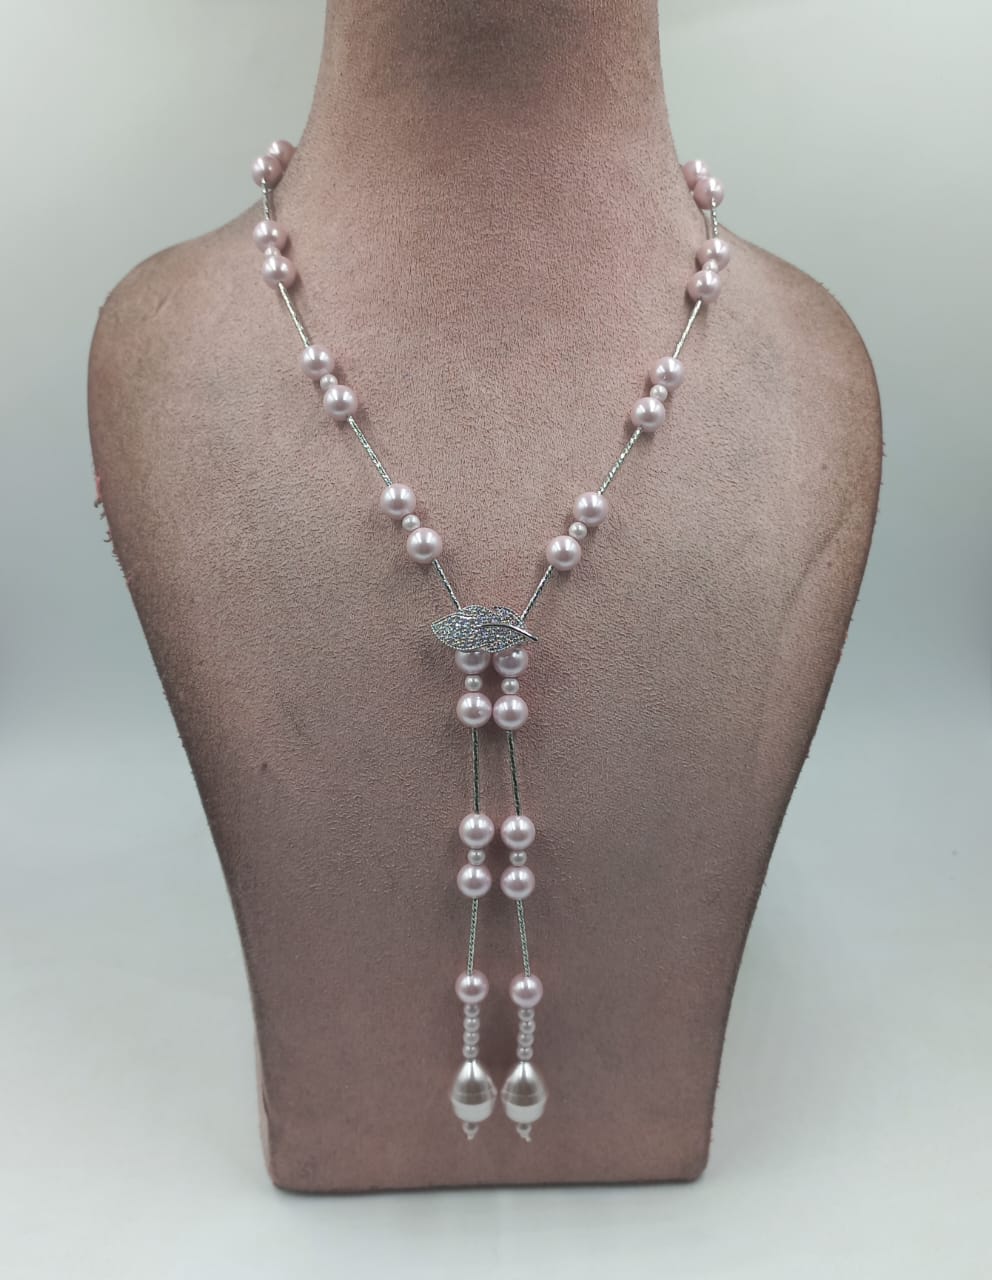 Elegant Baroque Pearl Lariat Necklace, Multicolor Shell pearls Elegant Necklace |Silver tone Color Shell Pearl Lariat Jewelry|Gift for Women